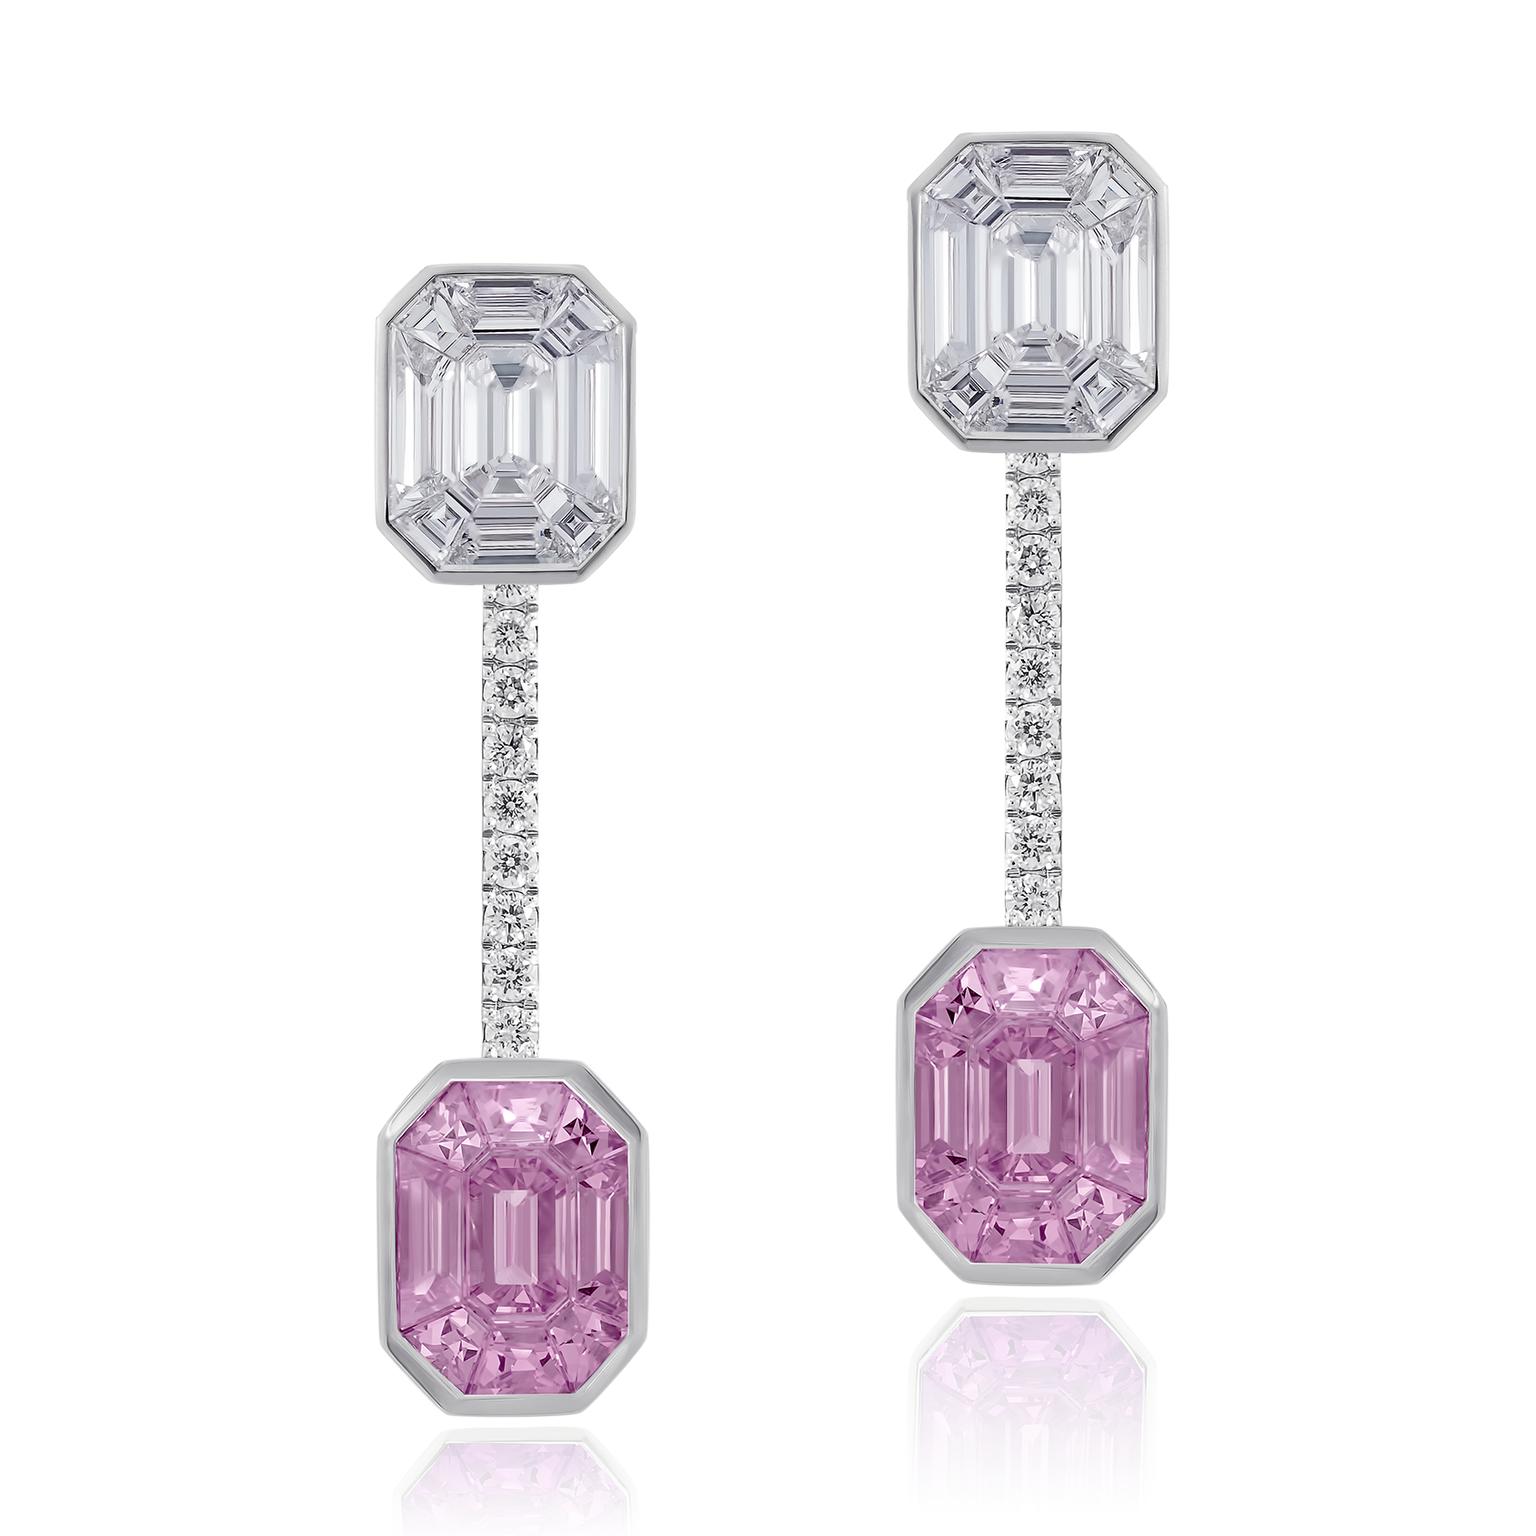 Stenzhorn Muse Pantoni pink sapphire and diamondearrings